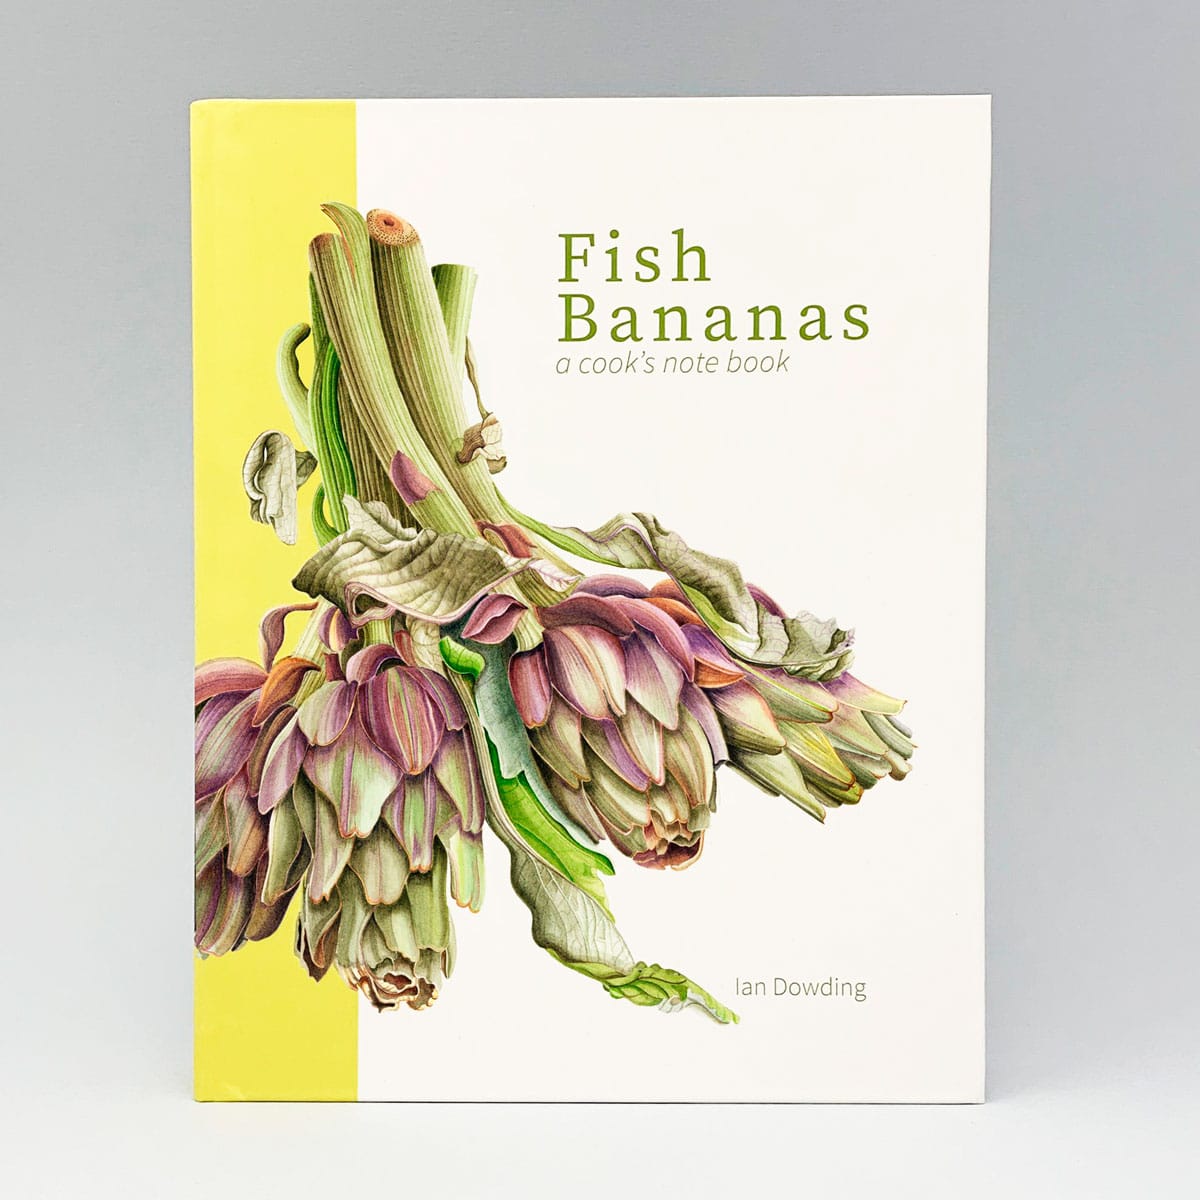 Fish Bananas cookbook by Ian Dowding